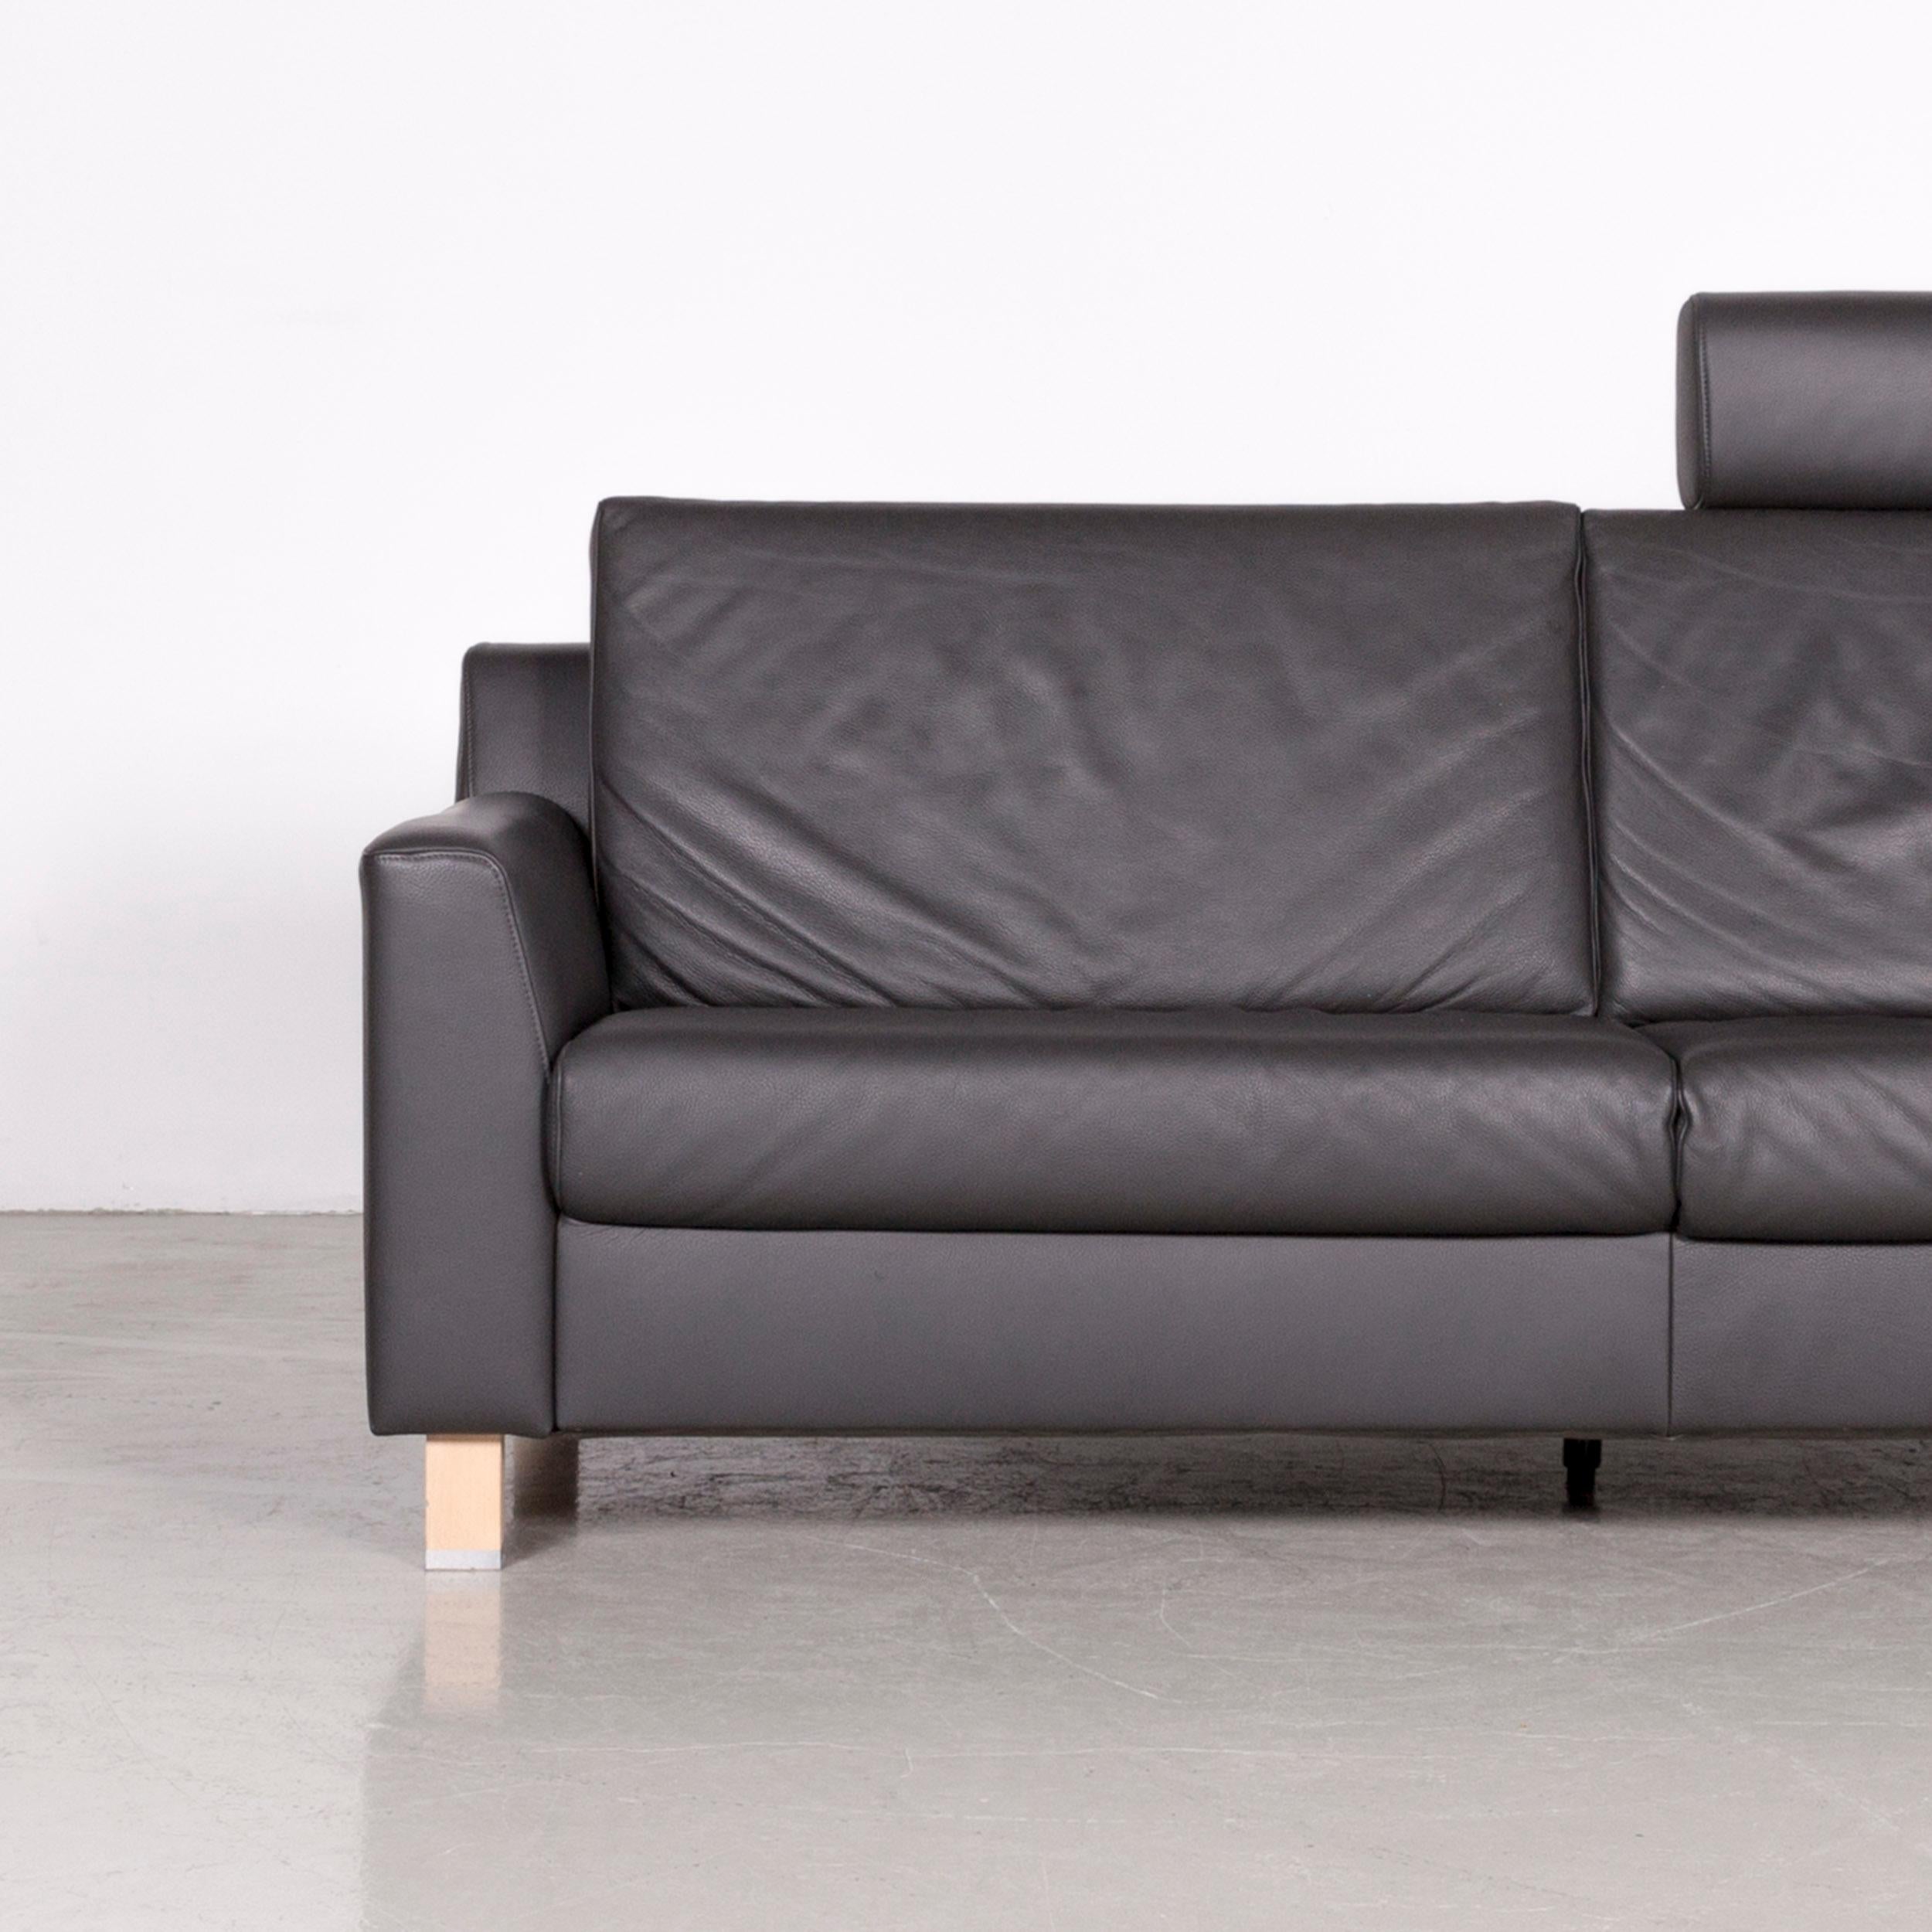 German Ewald Schillig Flex Plus Designer Leather Sofa Grey Three-Seat Couch For Sale